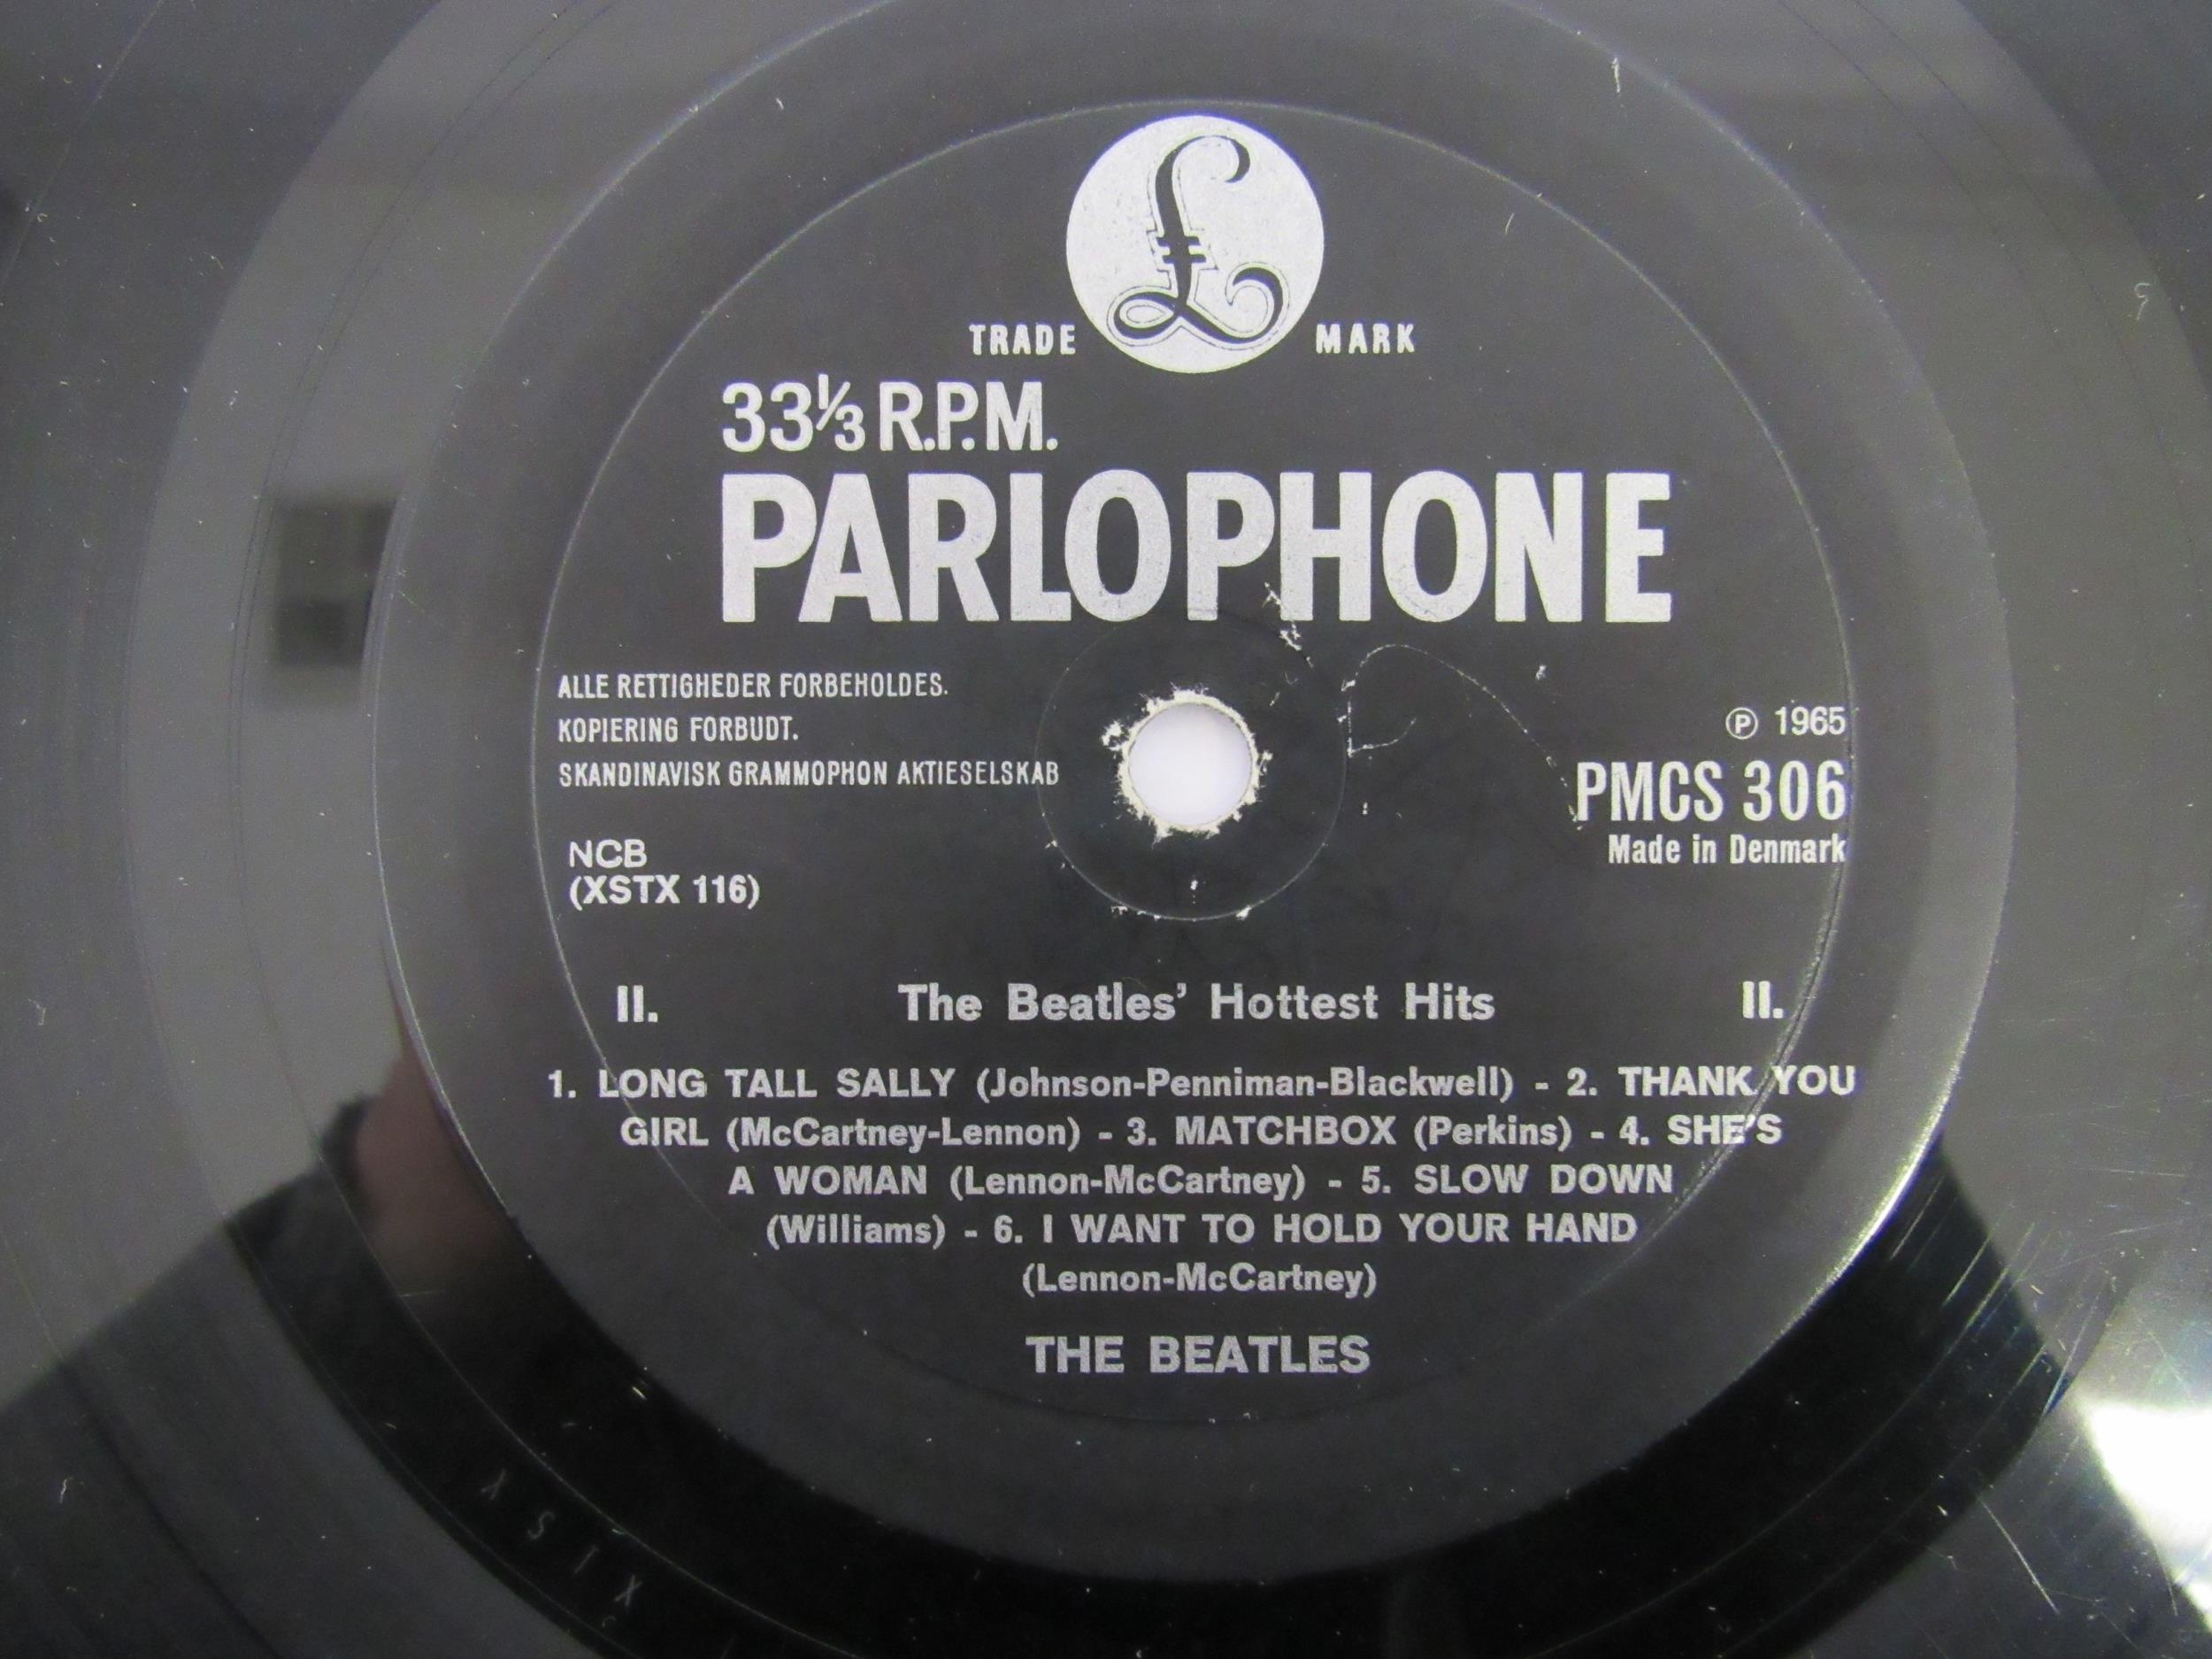 THE BEATLES: 'The Beatles Hottest Hits' LP, Parlophone PMCS 306, matrices XSTX 115 1 / XSTX 116 1, - Image 4 of 7